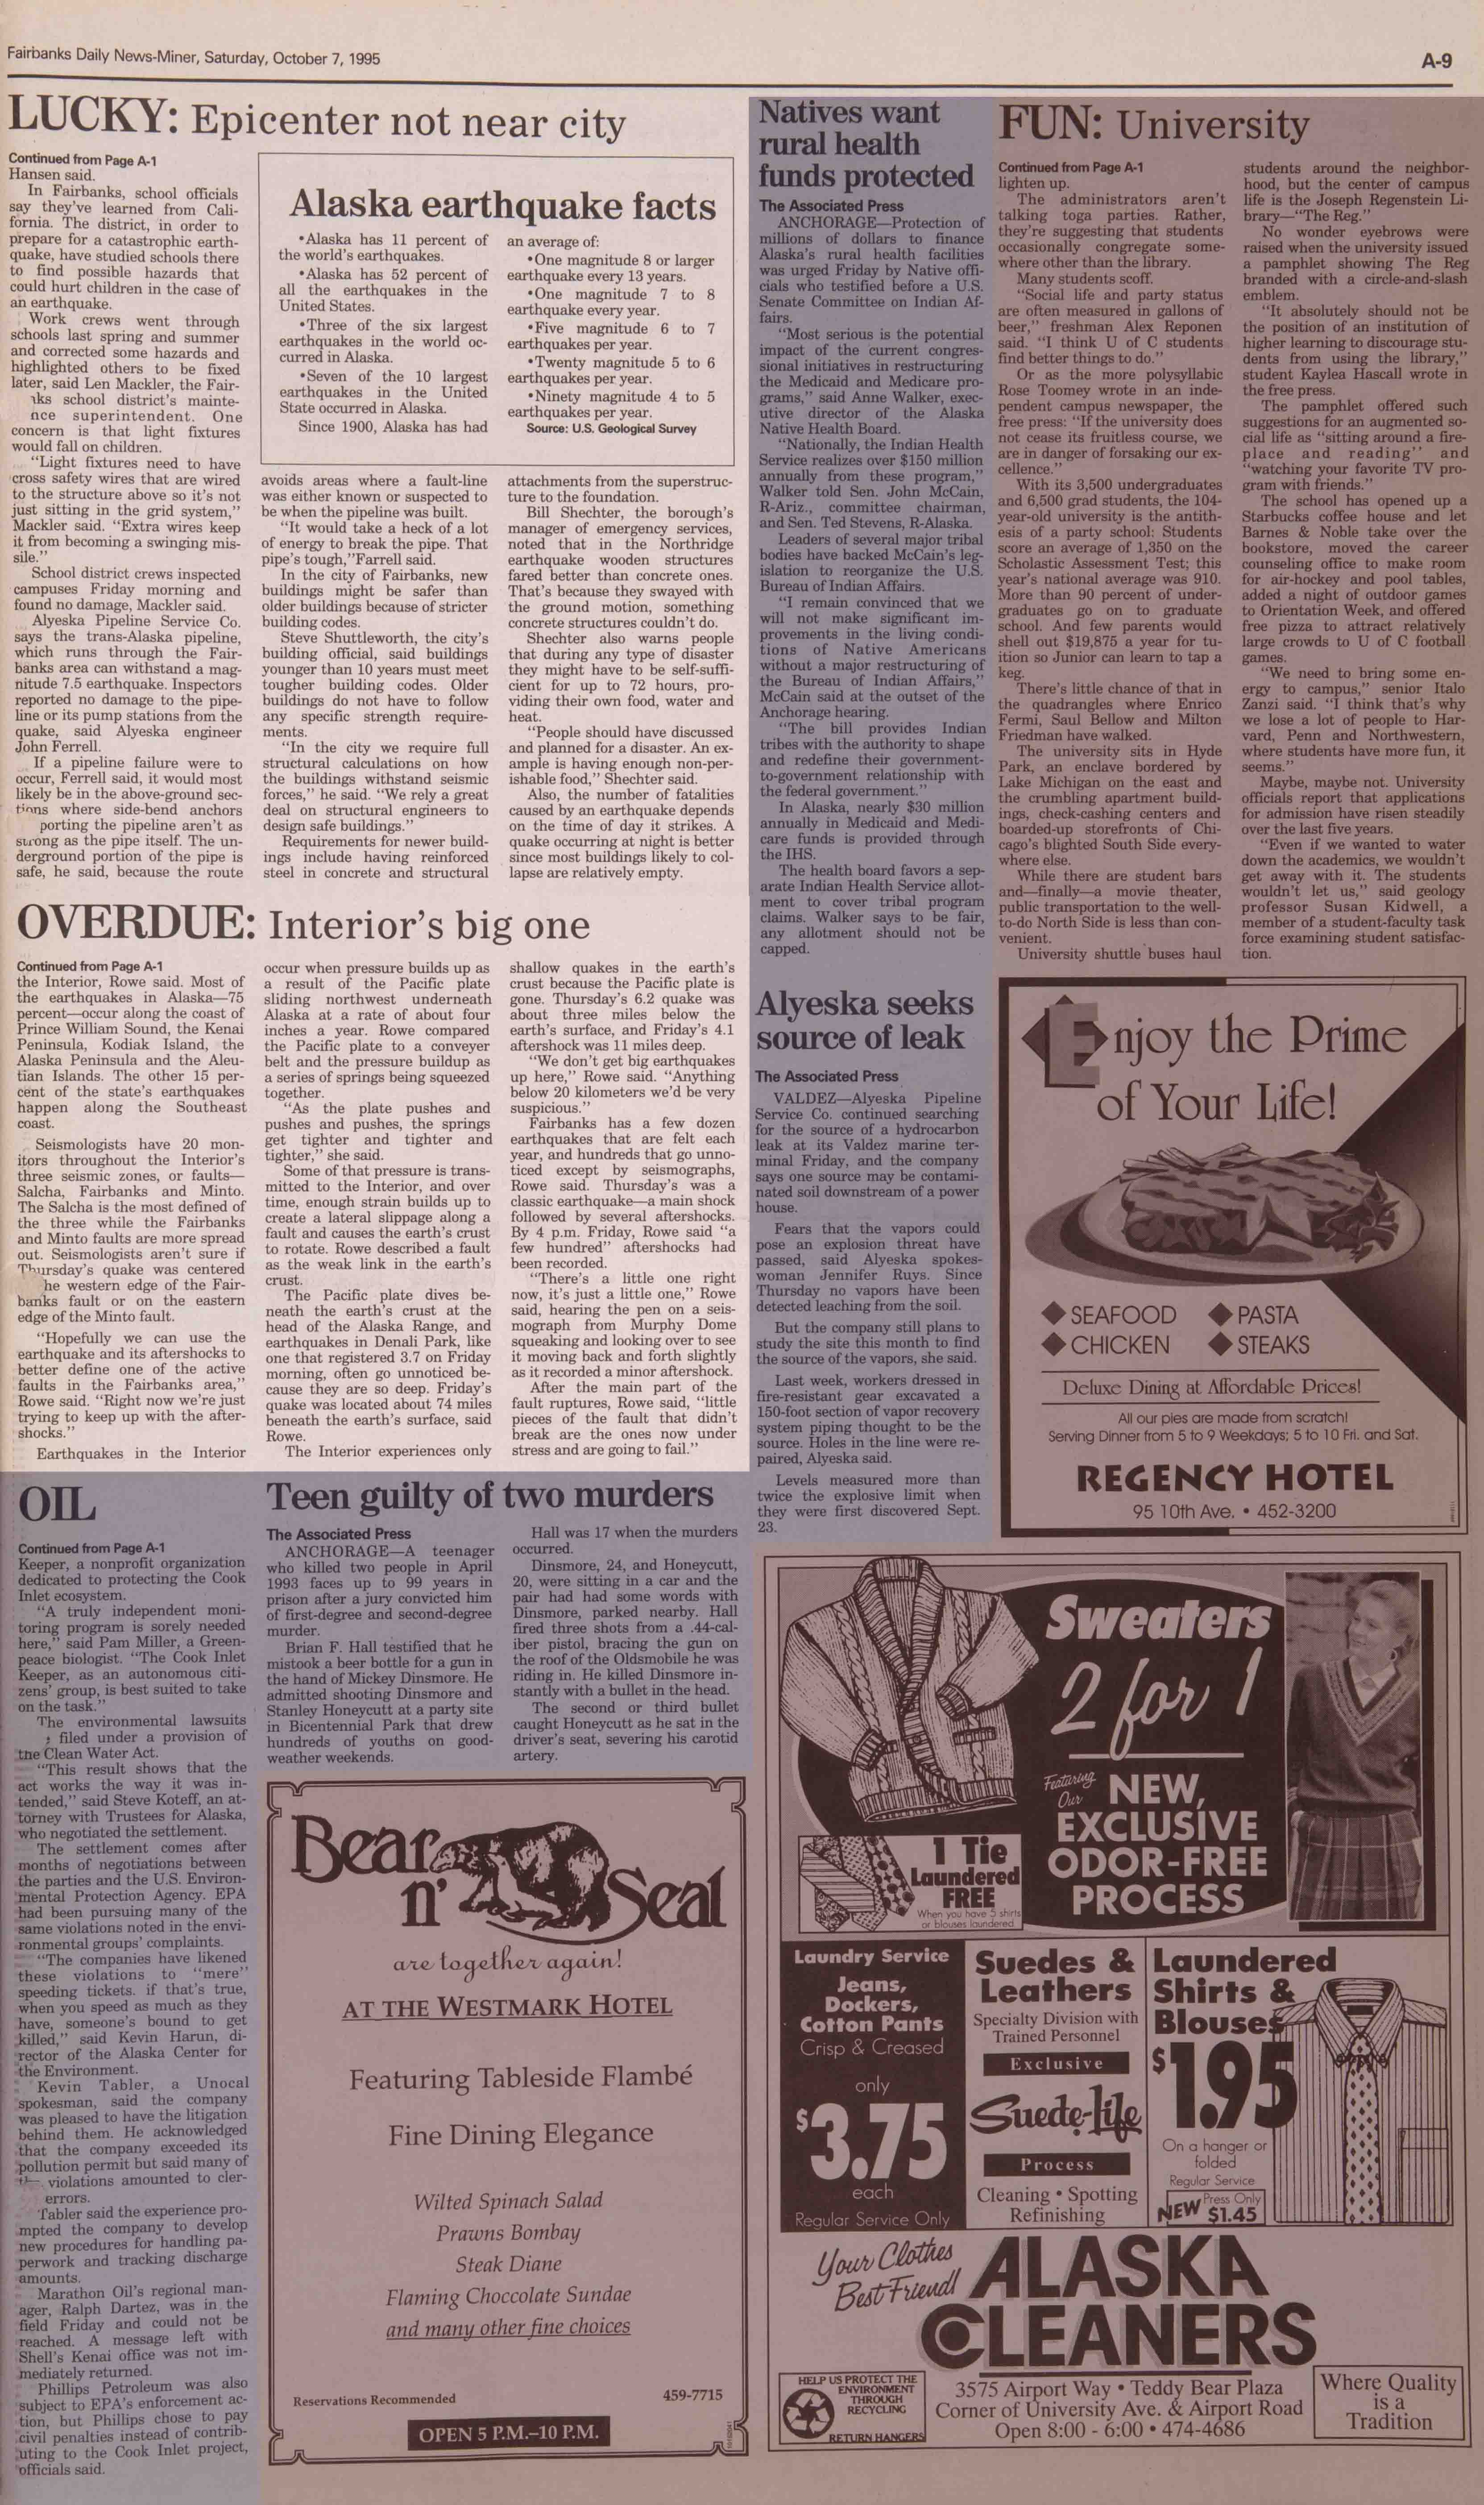 1995 October 7, Fairbanks Daily News-Miner (pg 9)